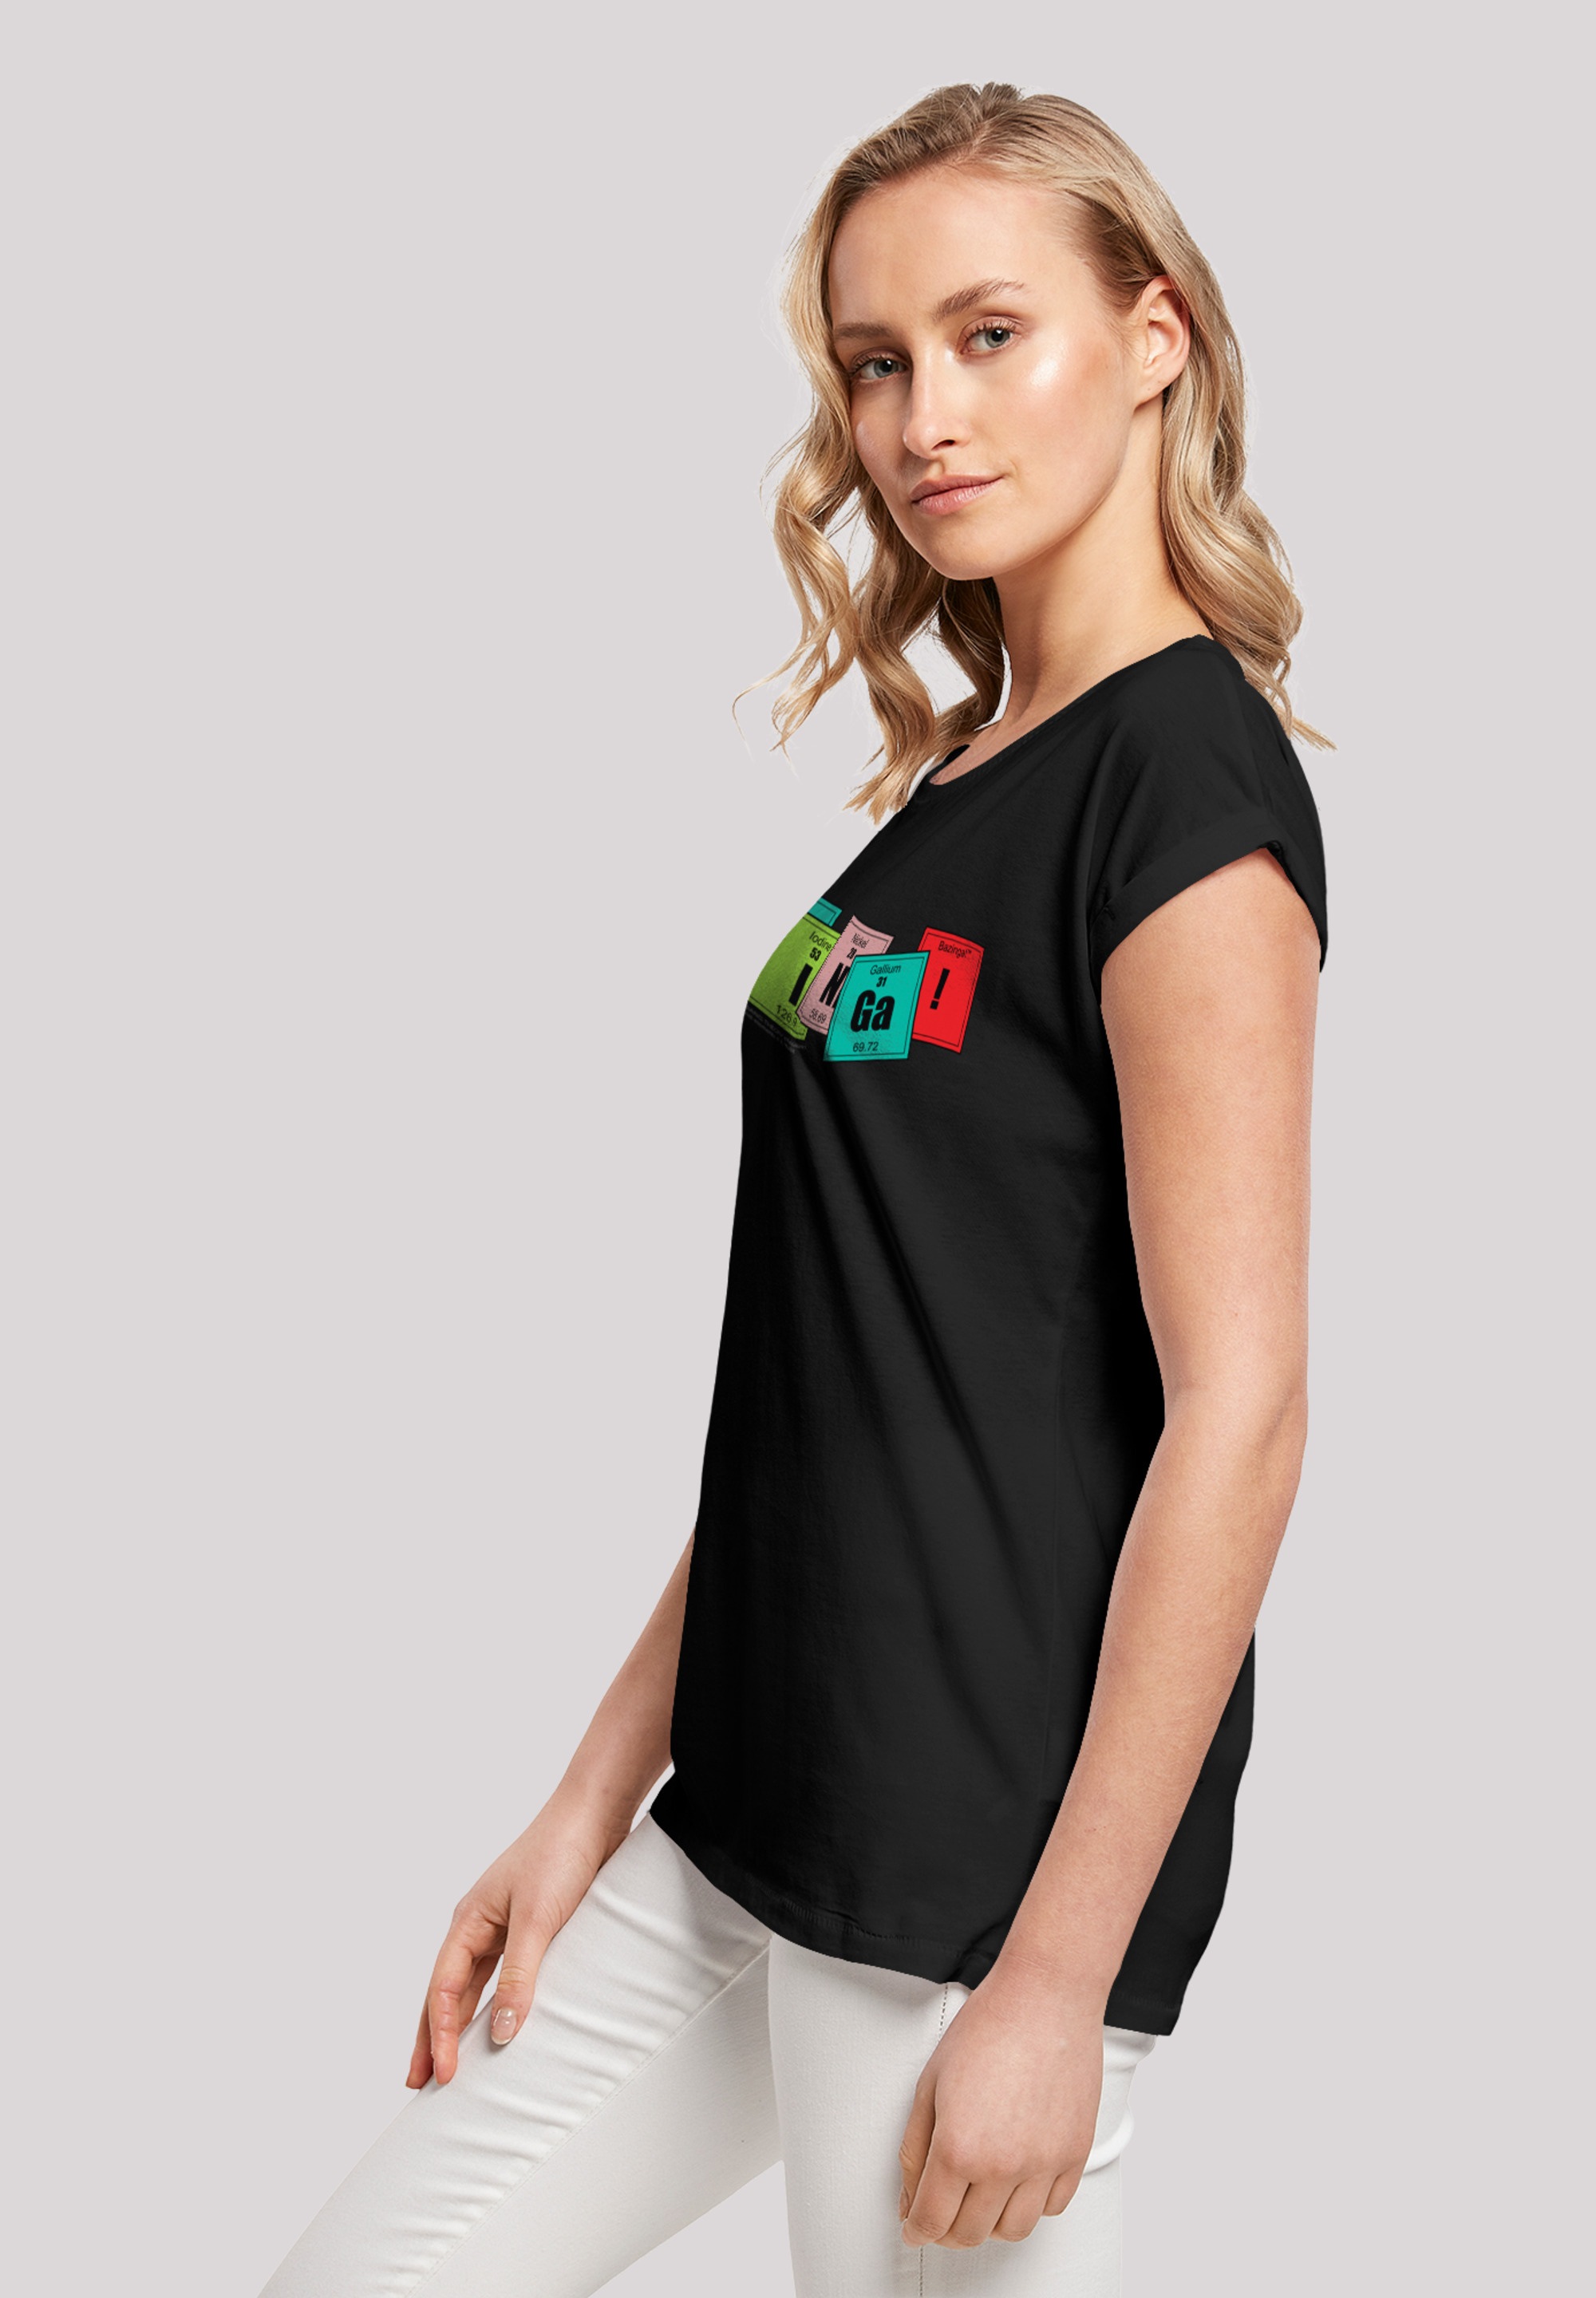 Print T-Shirt shoppen Bang »Shirt Bazinga\'«, \'Big Theory F4NT4STIC